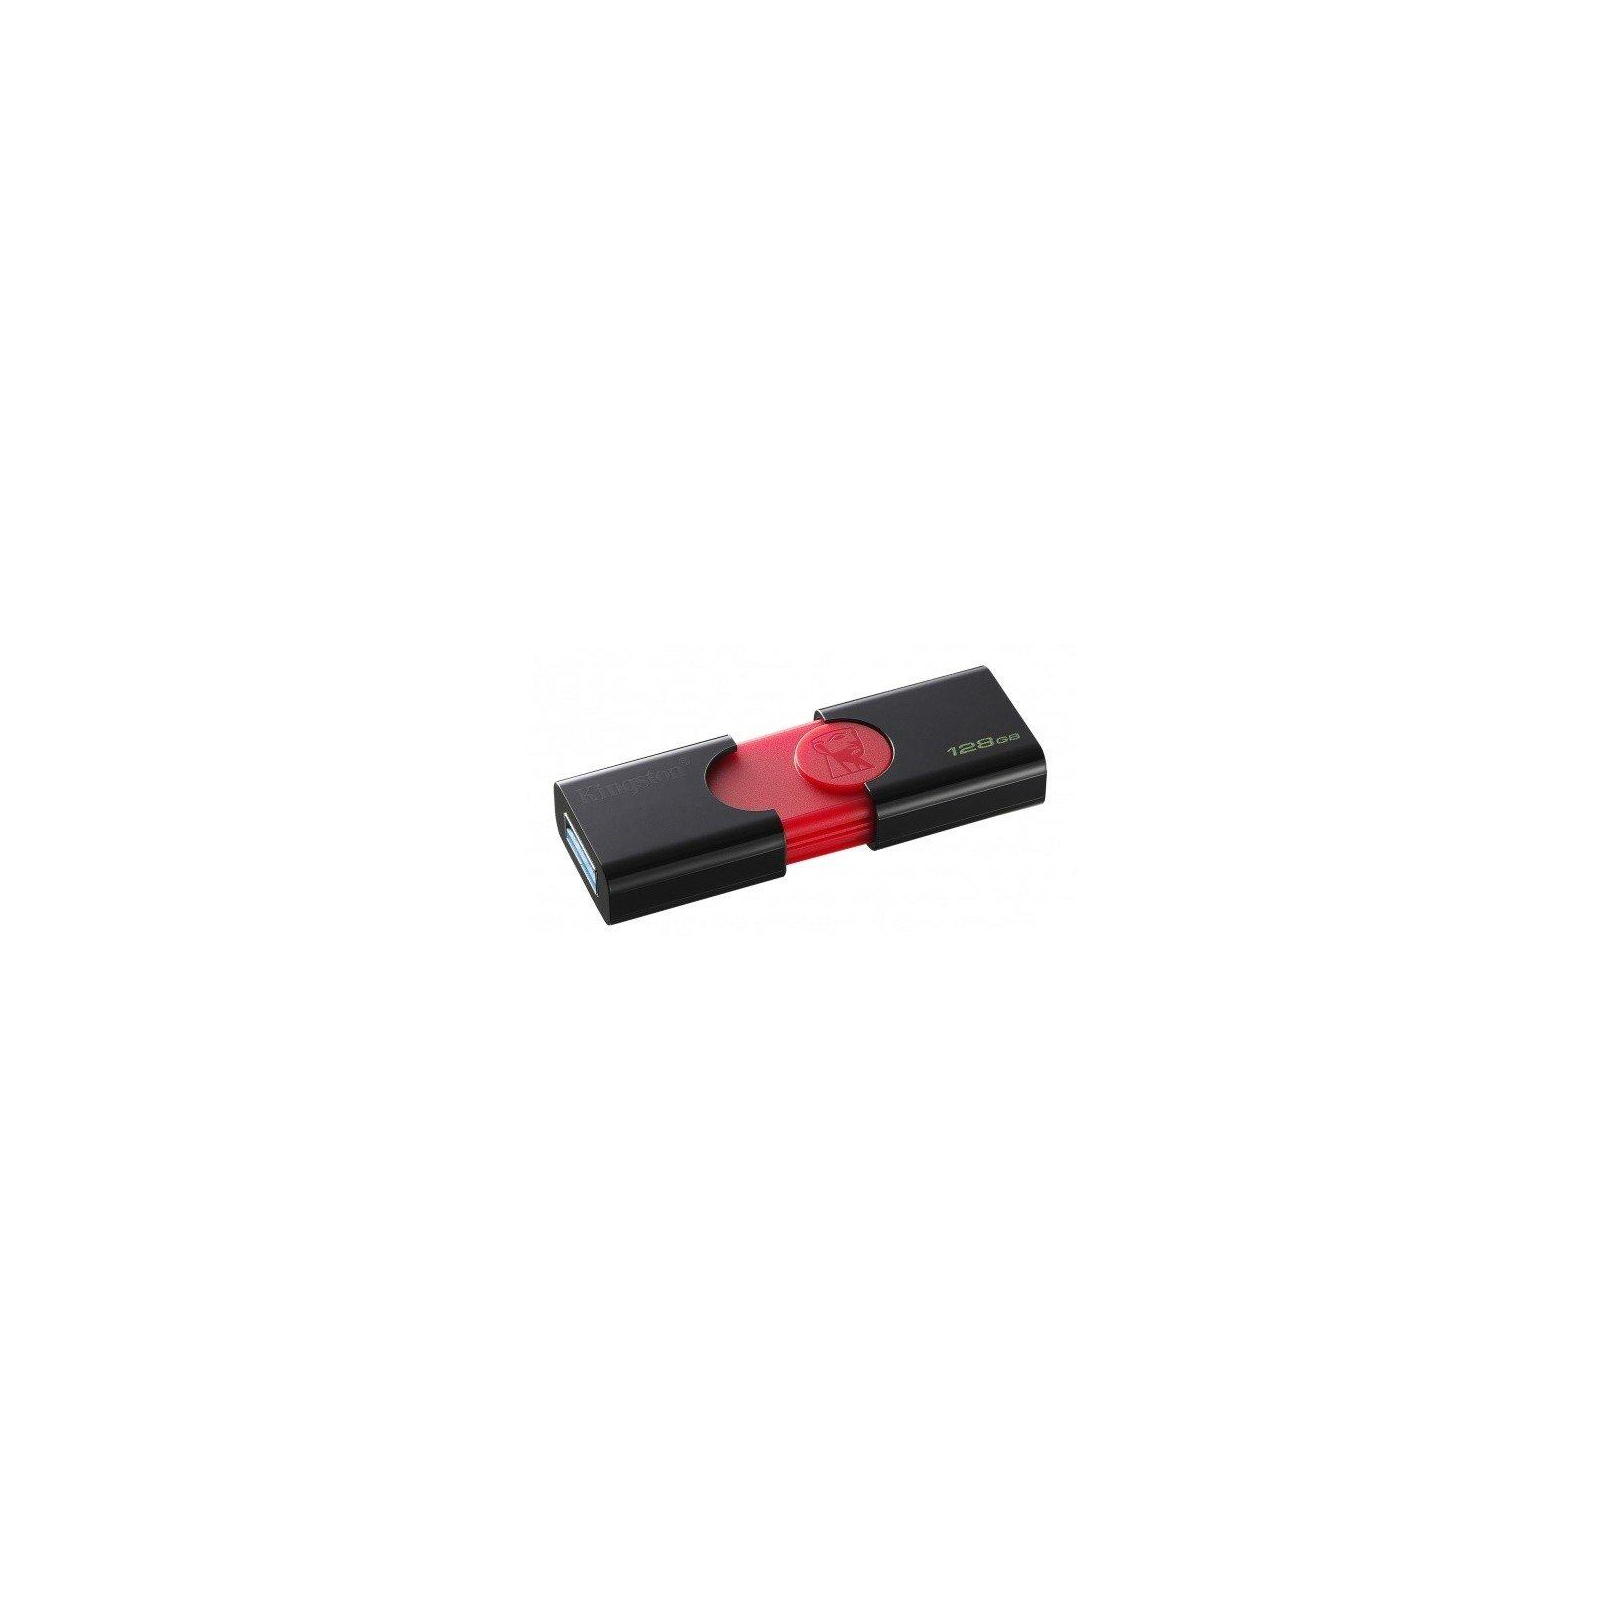 USB флеш накопитель Kingston 128GB DT106 USB 3.0 (DT106/128GB) изображение 5